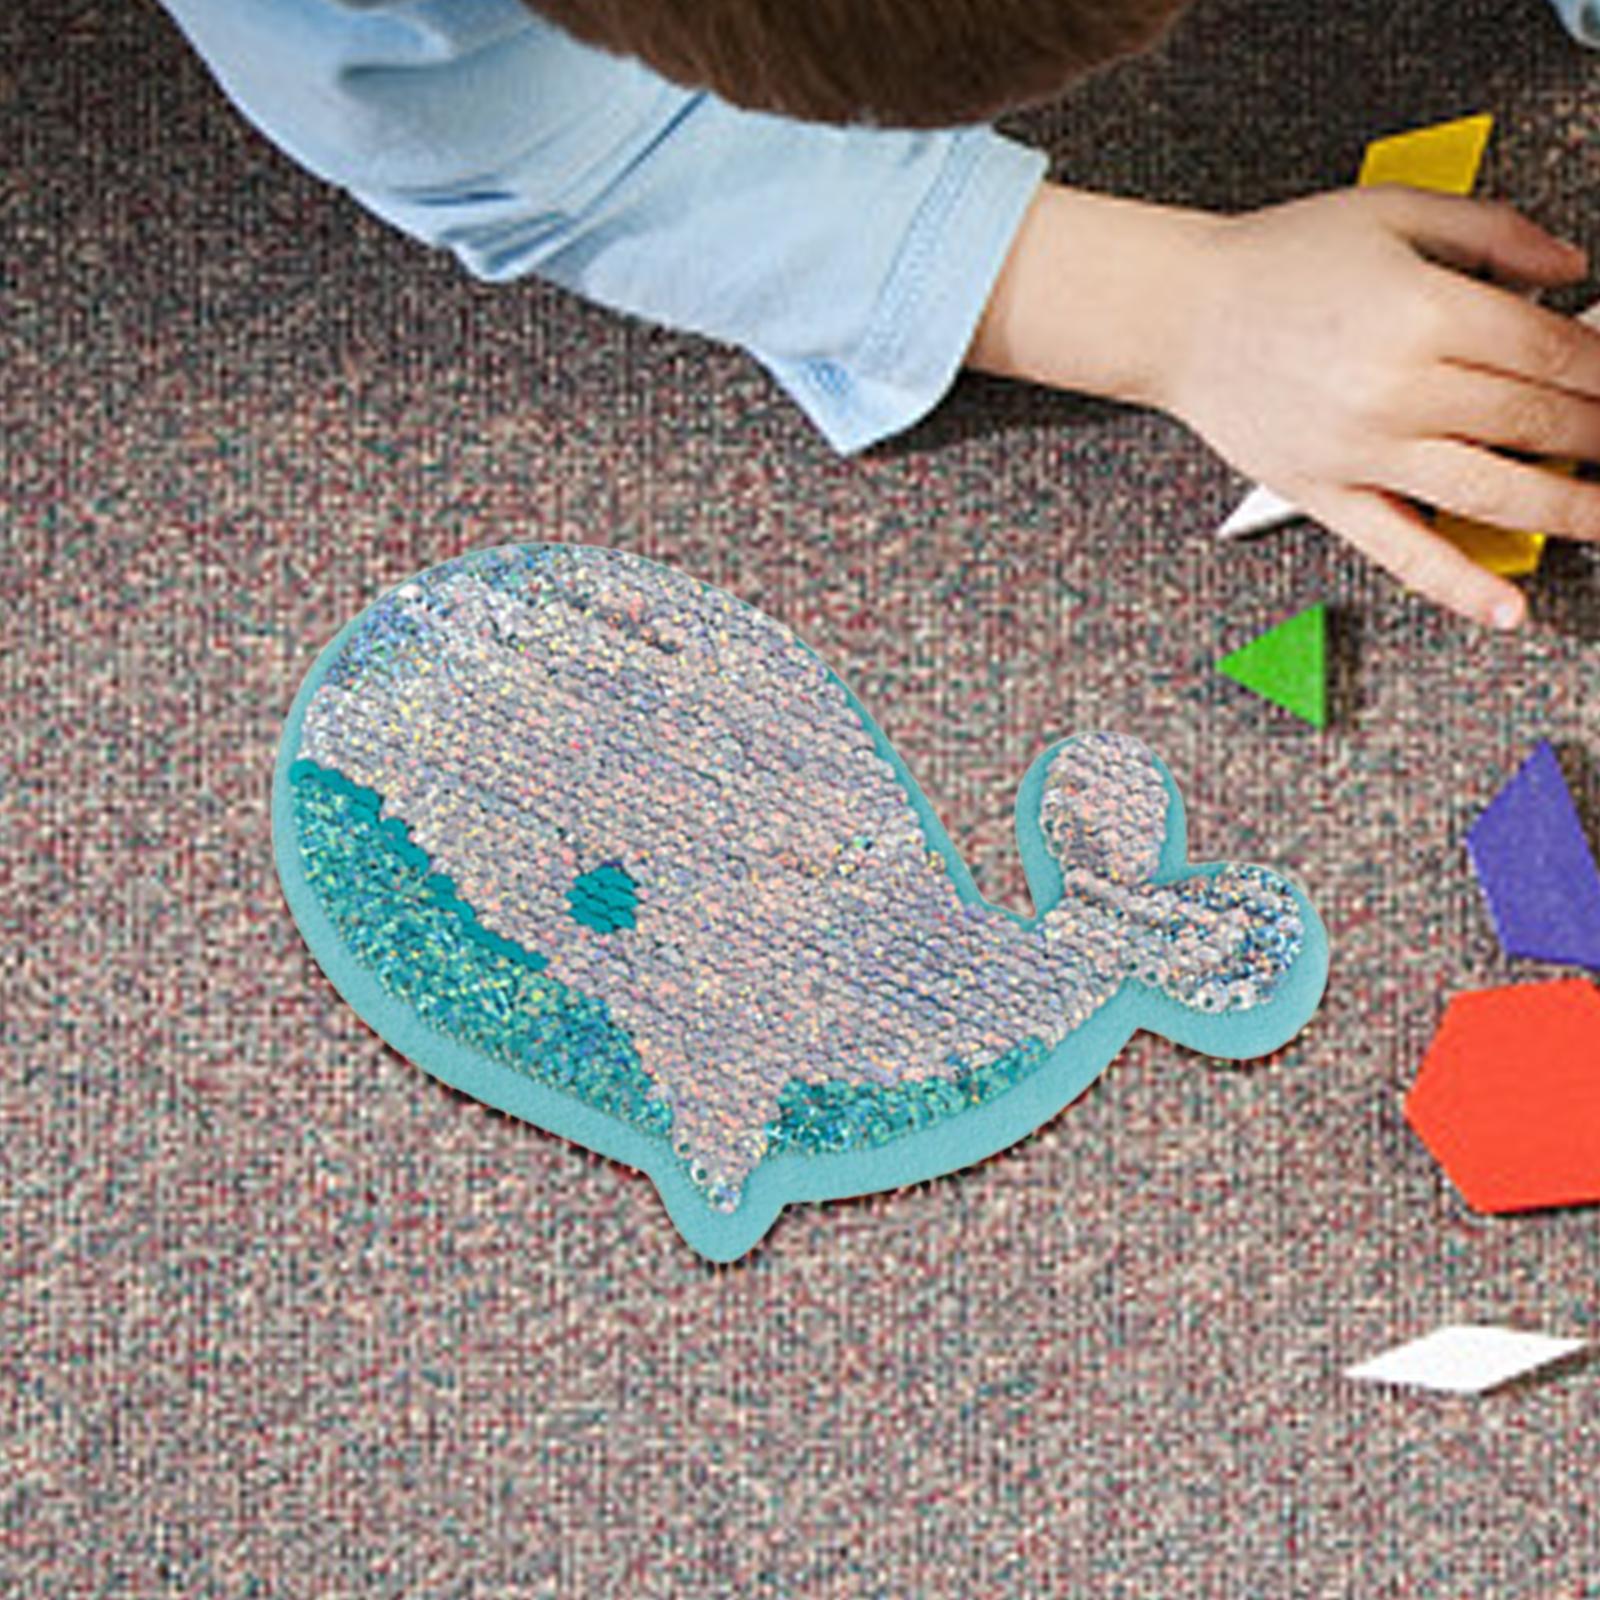 Montessori Busy Board Sequin DIY Accessories for Boys and Girls Children